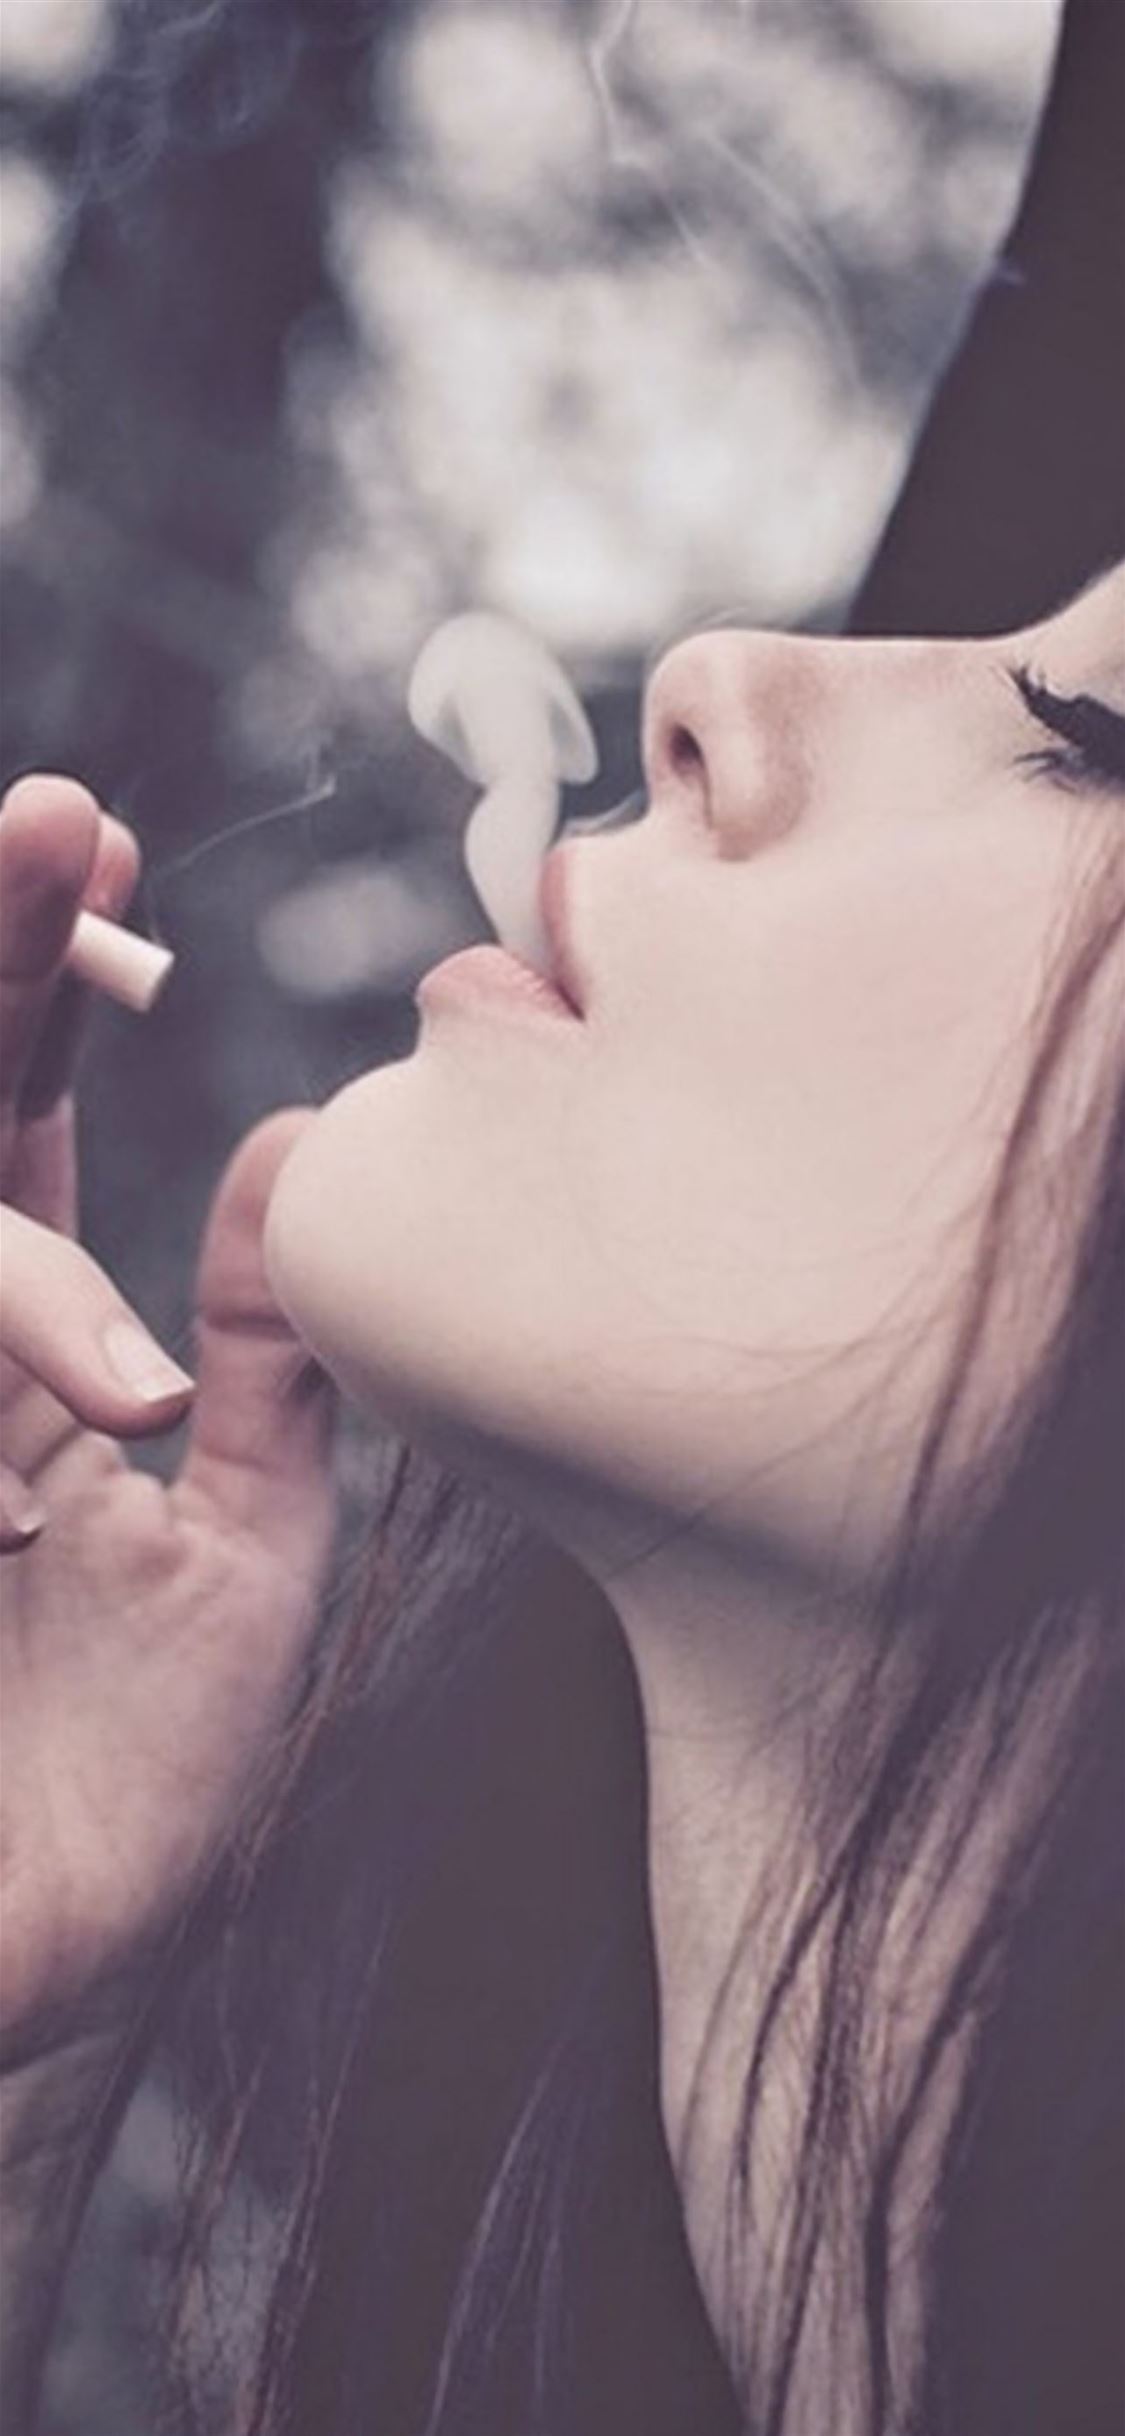 Sexy Smoking Girl iPhone wallpaper 